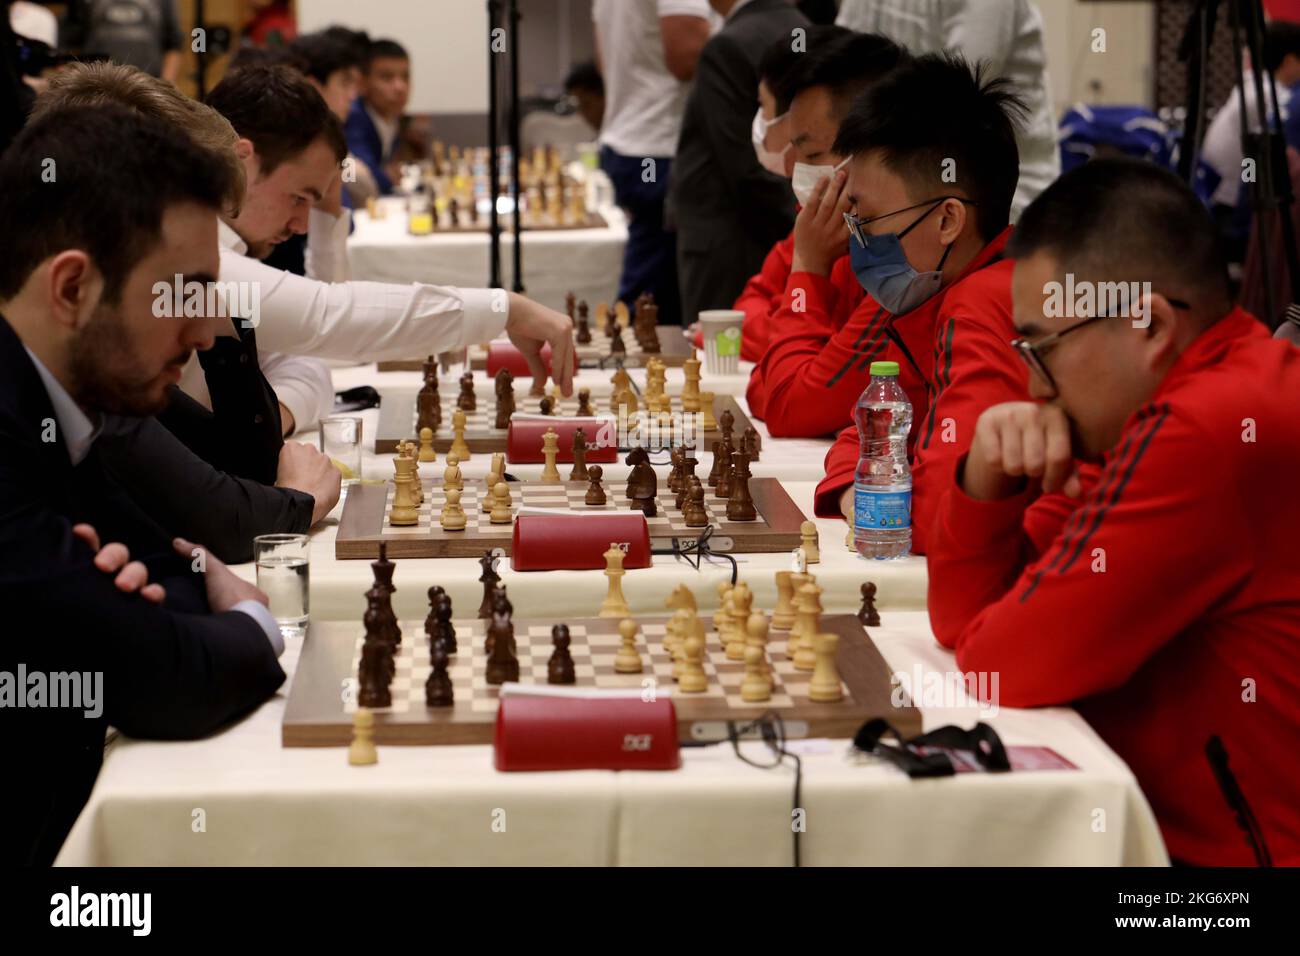 World Team Chess Championship - Live